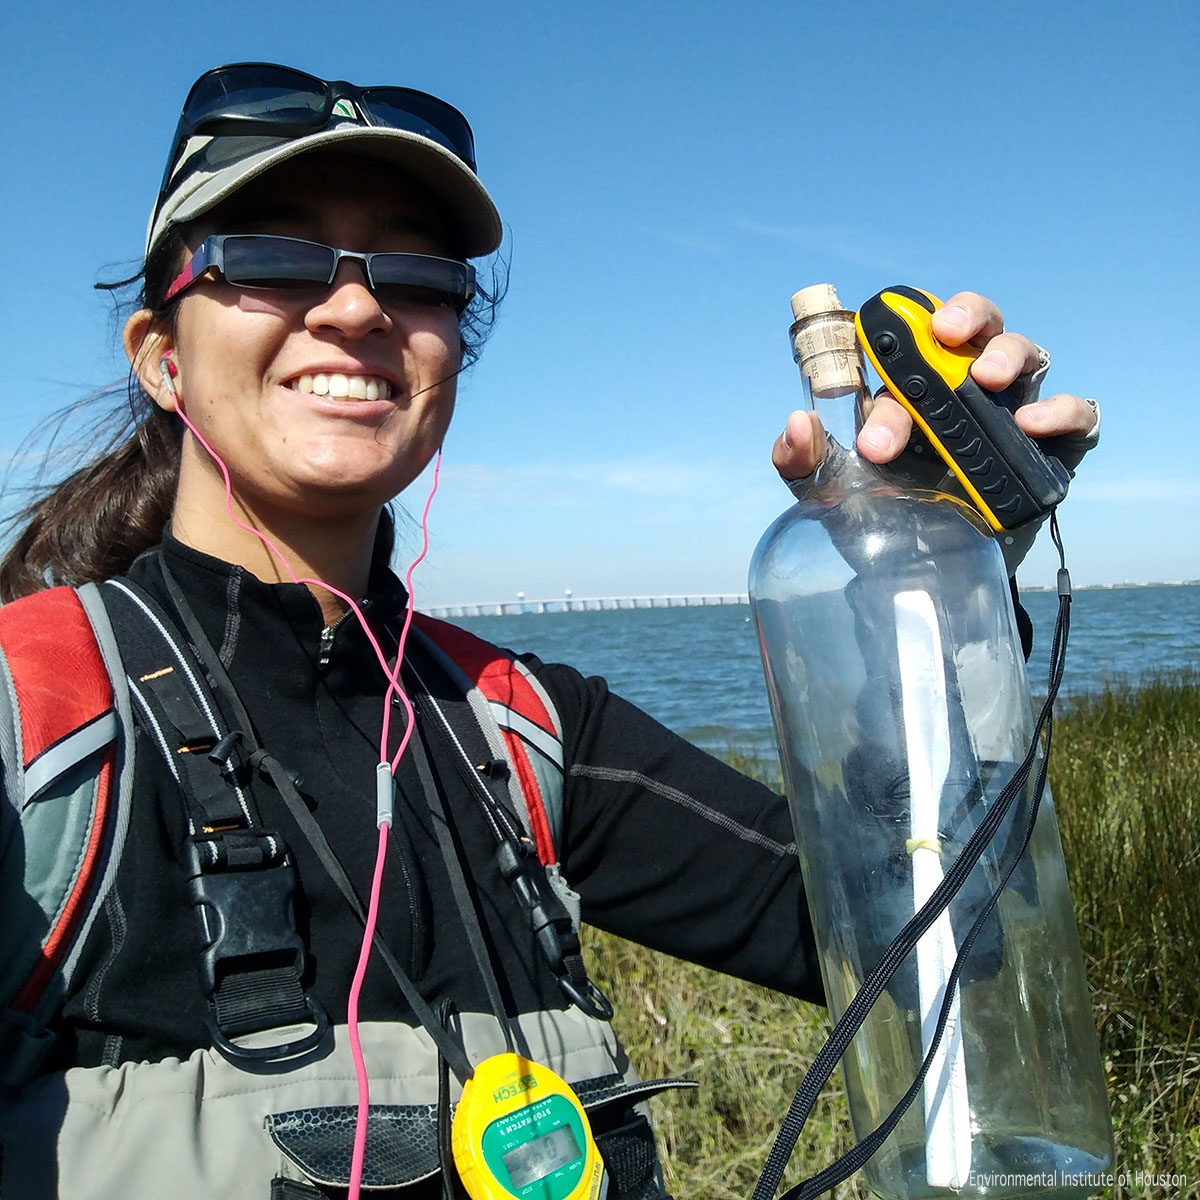 Nicole Morris retrieves a glass bottle found in a marsh on Galveston Island